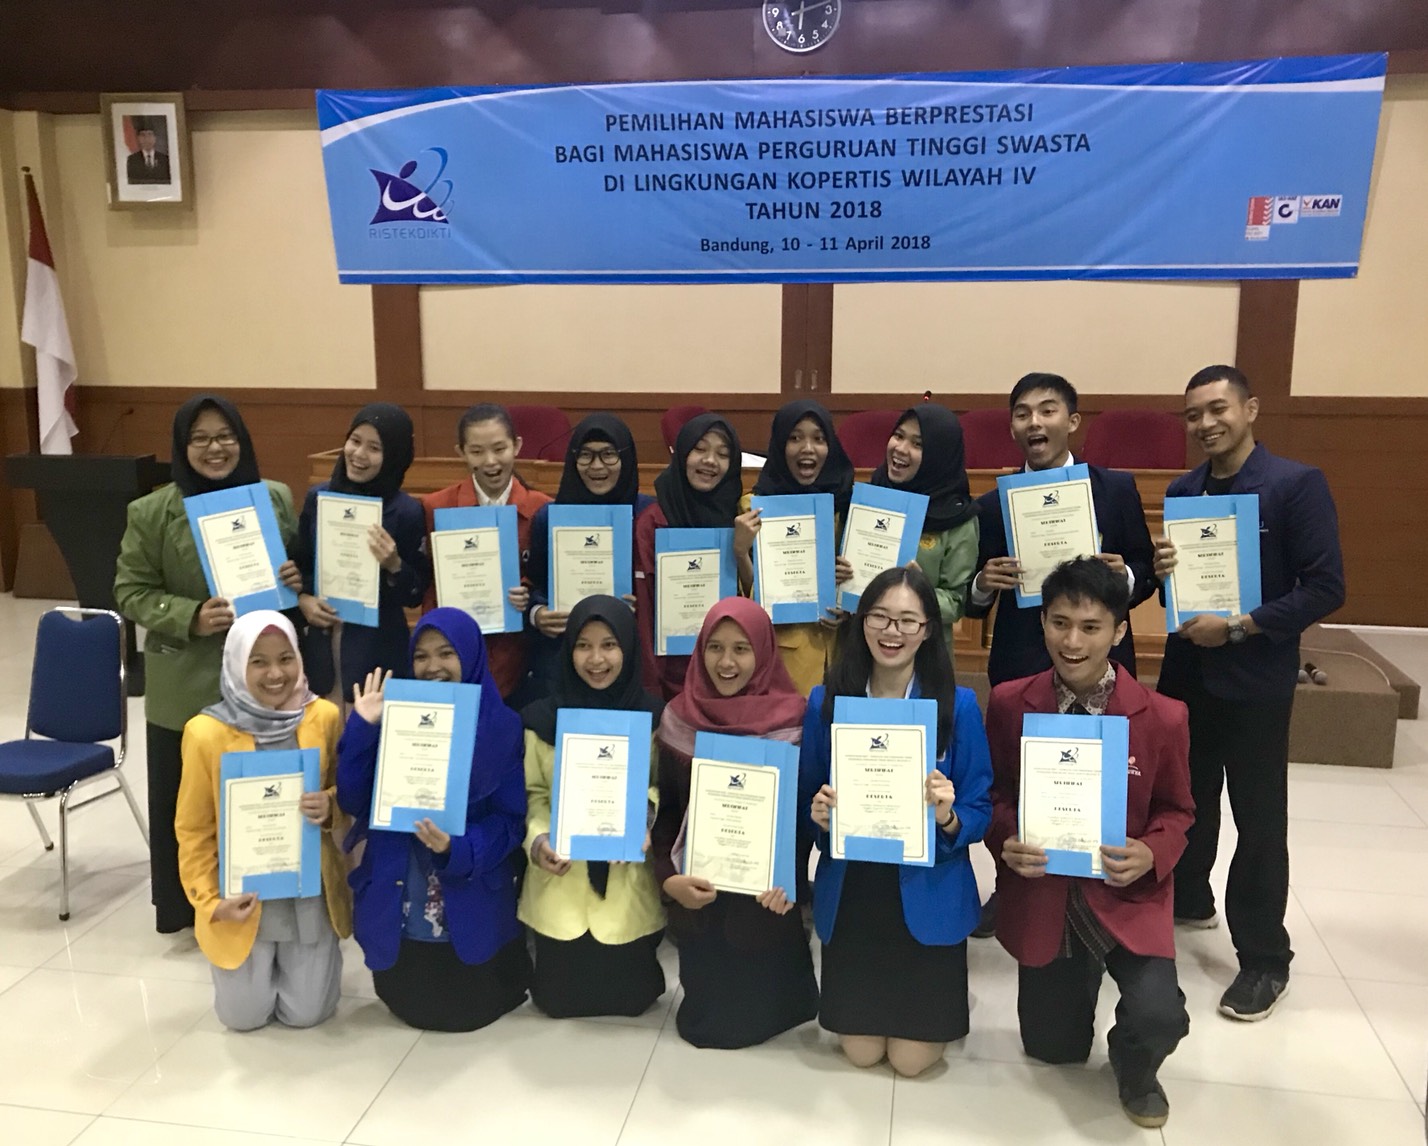 SGU Information Technology Student is through to the National Level for “Mahasiswa Berprestasi  Kopertis 2018”